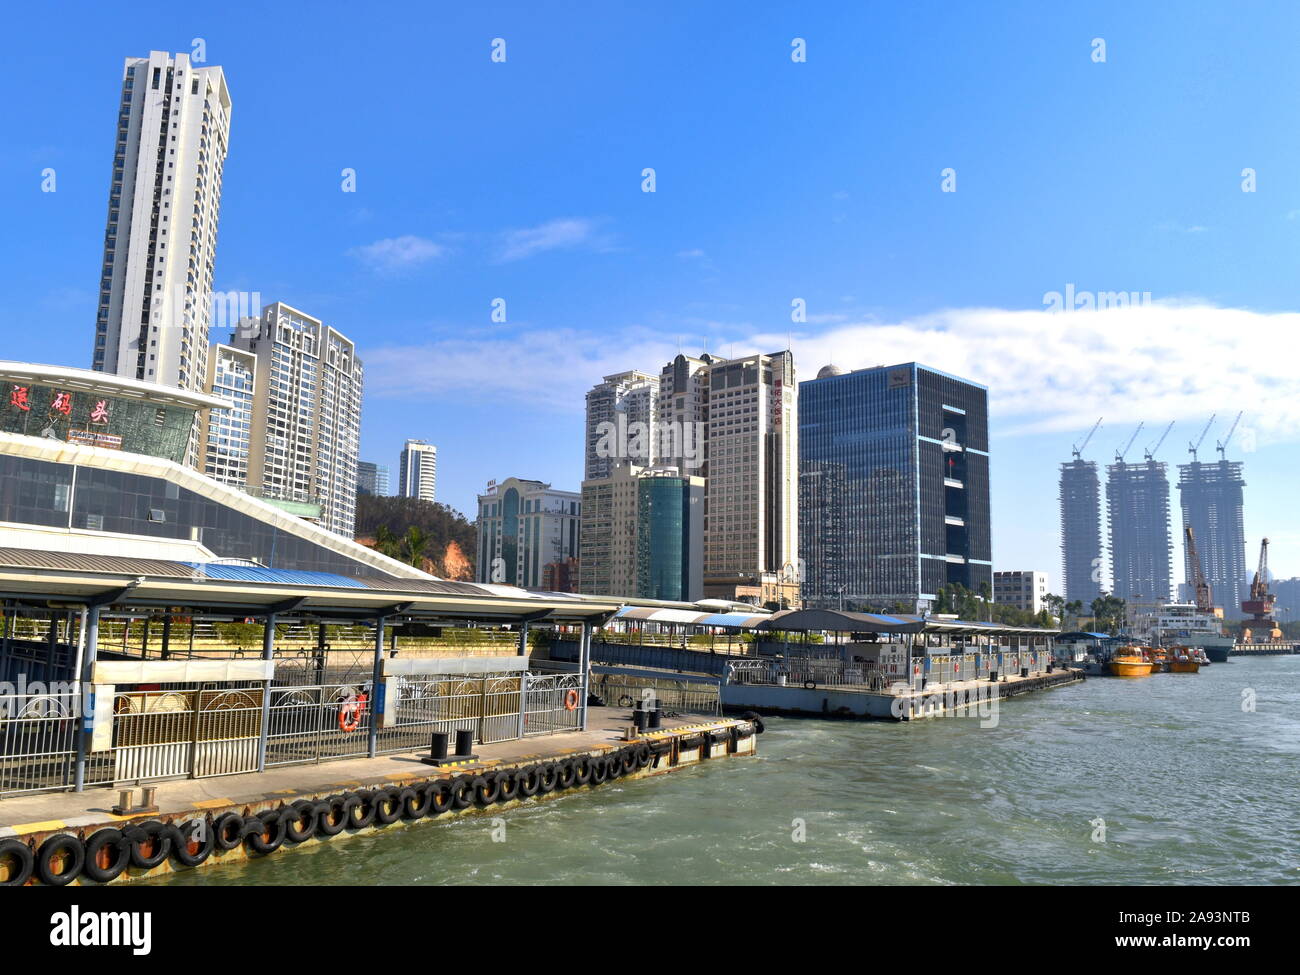 Xiamen international cruise terminal and urban development, China Stock Photo